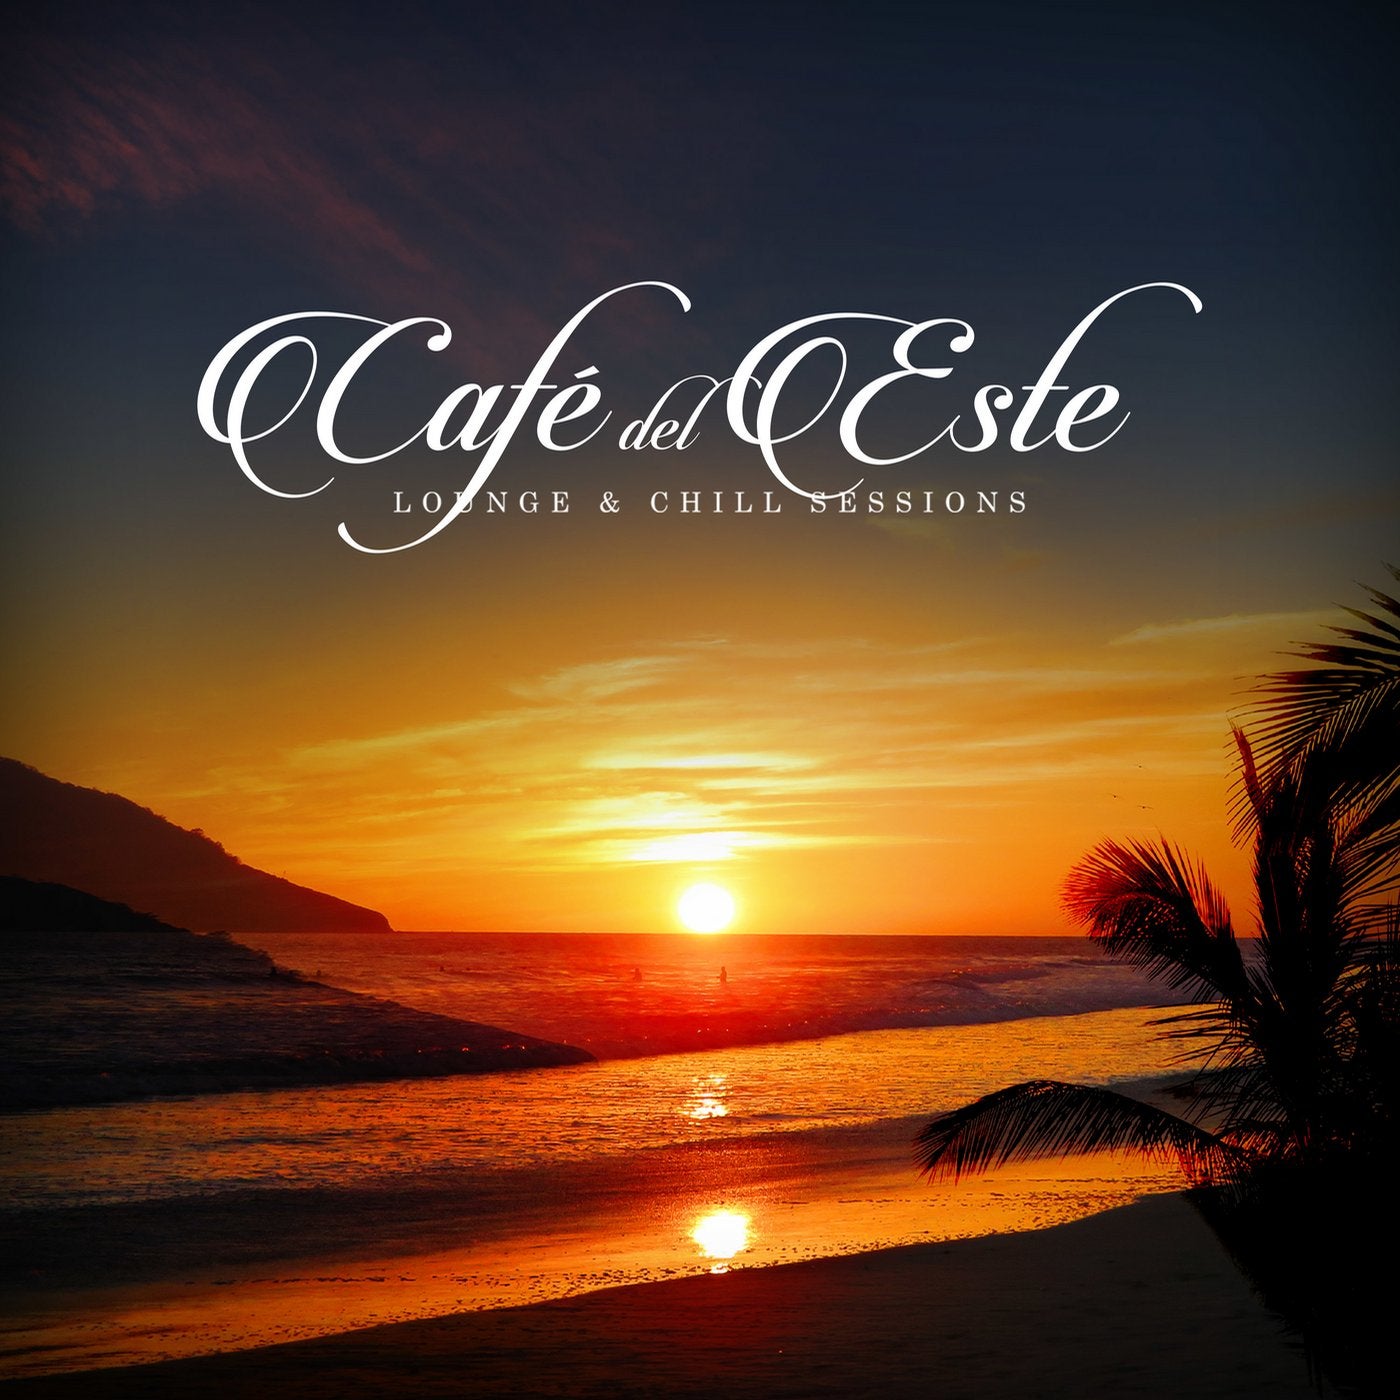 Café del Este - Lounge & Chill Sessions